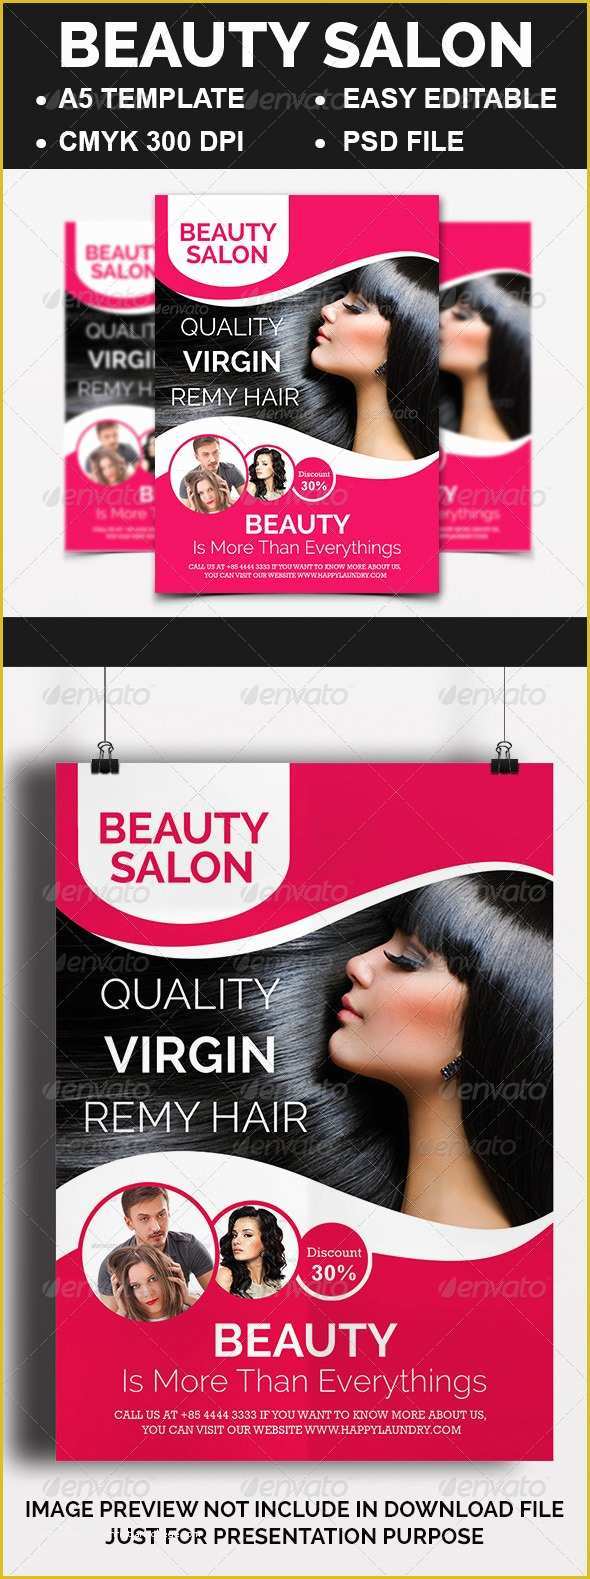 Hair Salon Website Design Templates Free Of Beauty Salon Flyer Templates Psd Free Download New Design